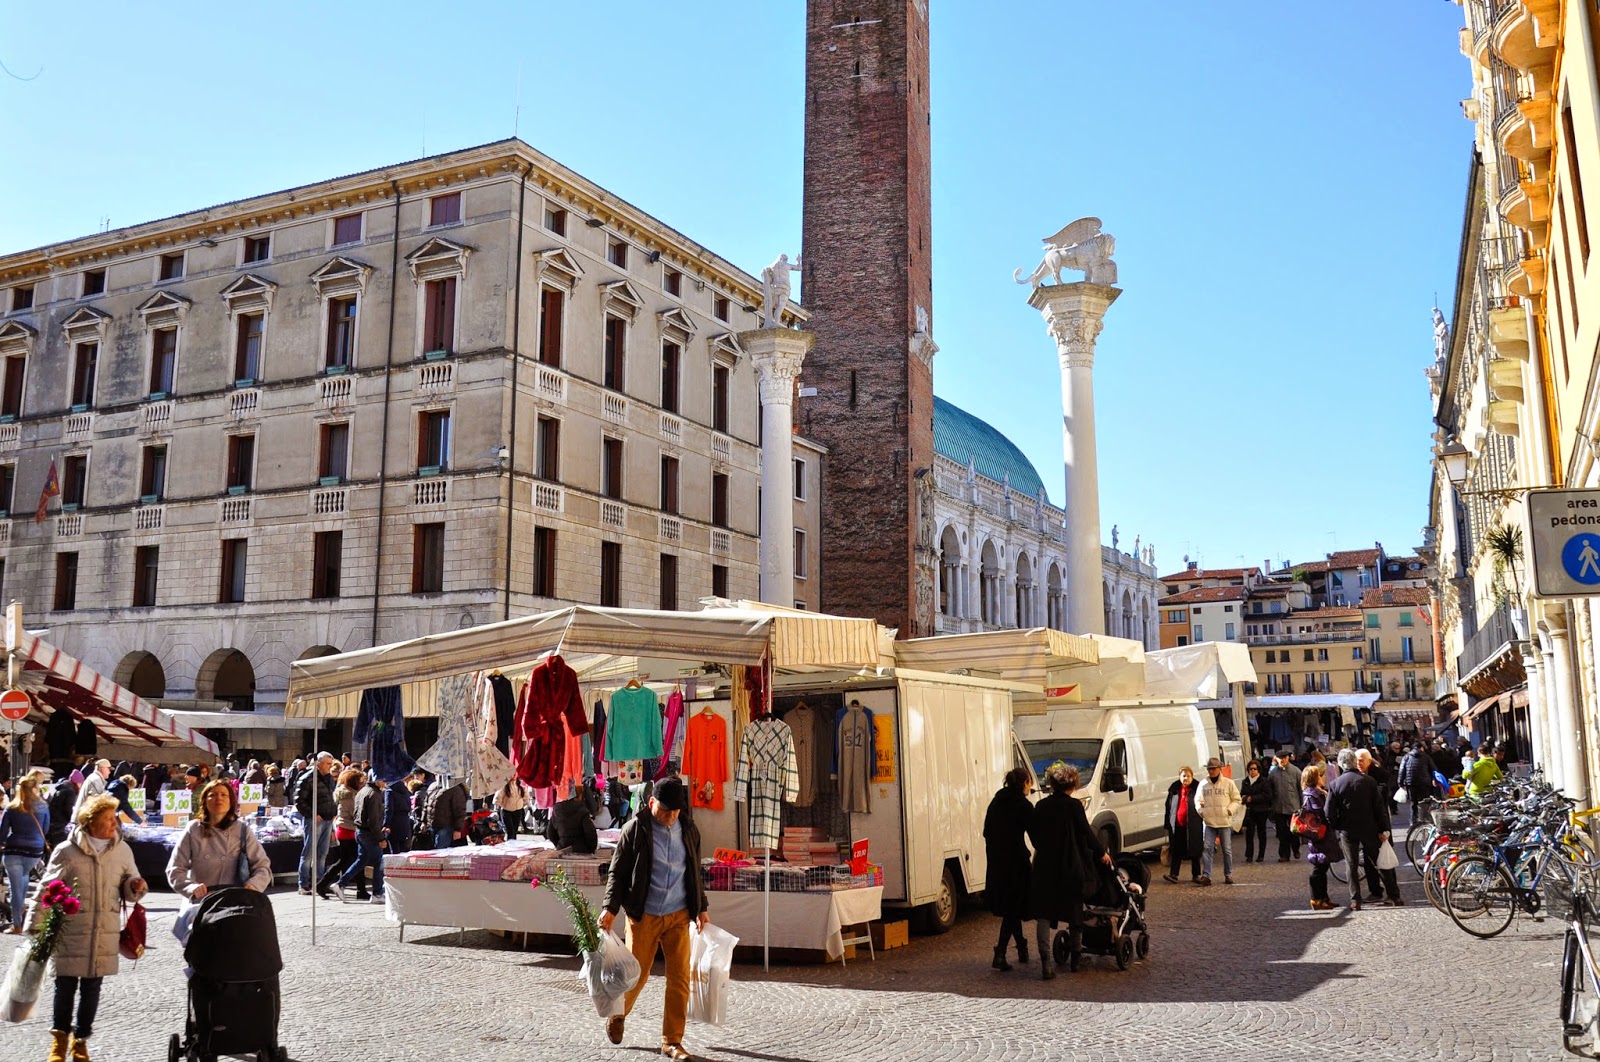 The Thursday market at Piazza dei Signori, Vicenza, Italy